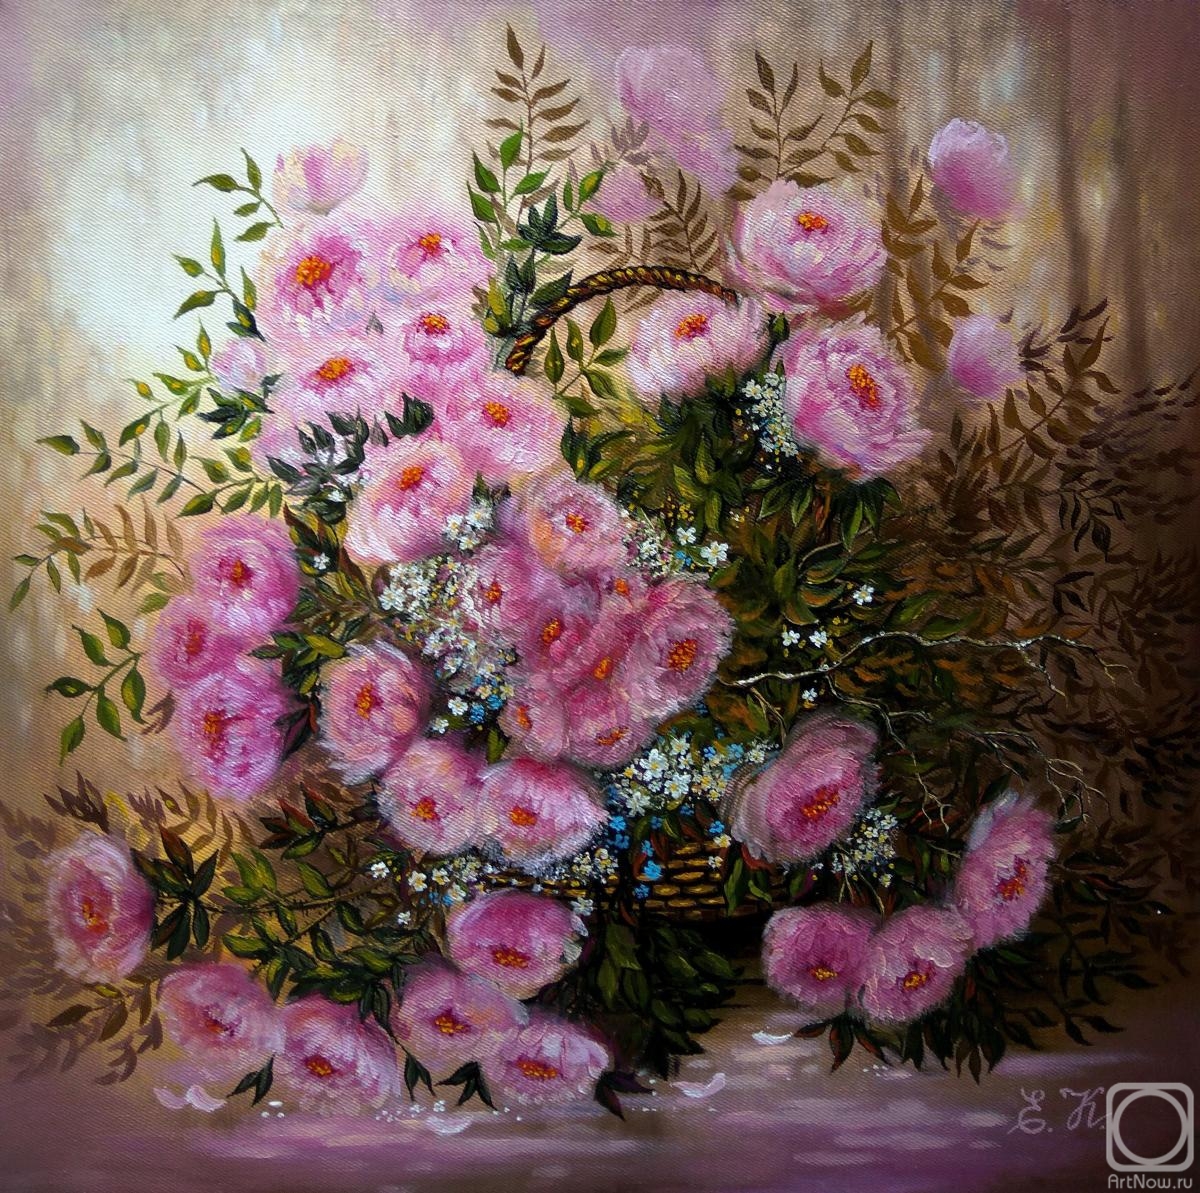 Korableva Elena. Flowers in a basket